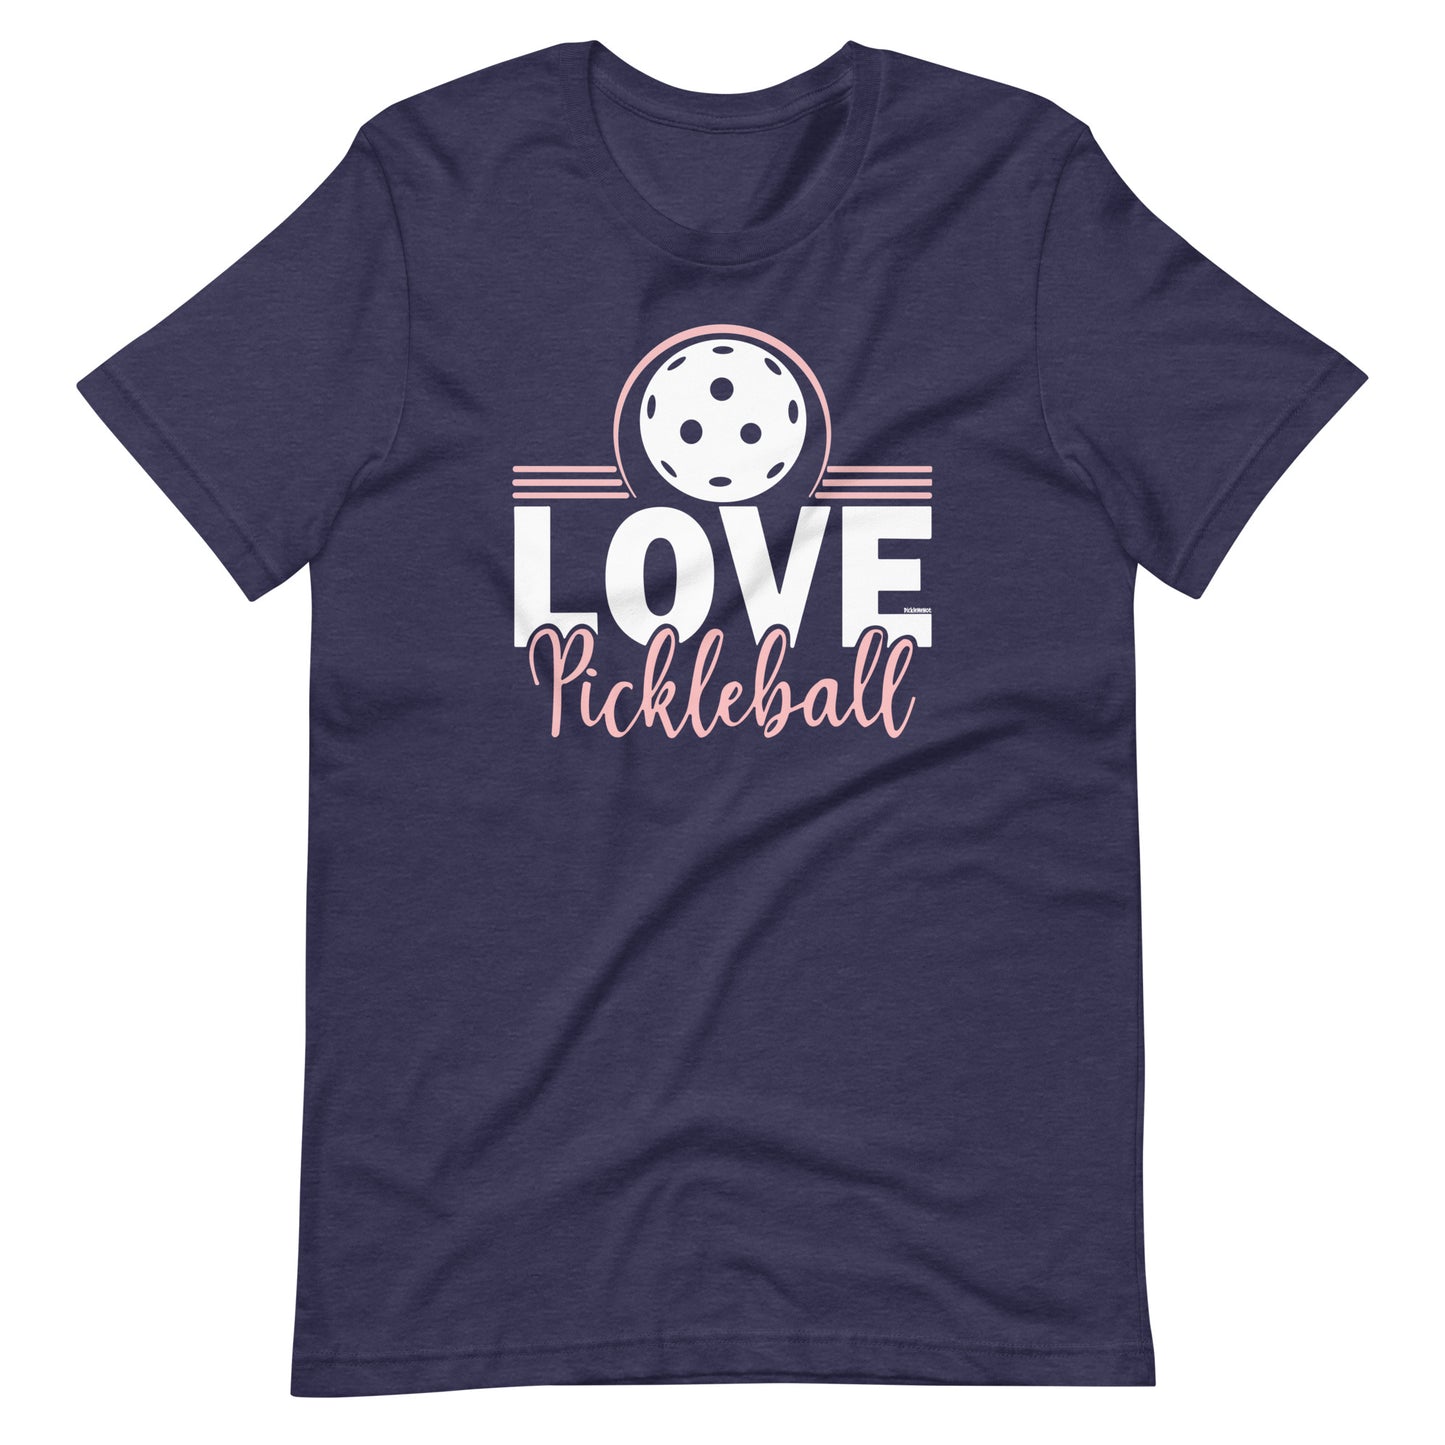 Fun Pickleball Graphic: "Love Pickleball," Womens Heather Midnight Navy Unisex T-Shirt